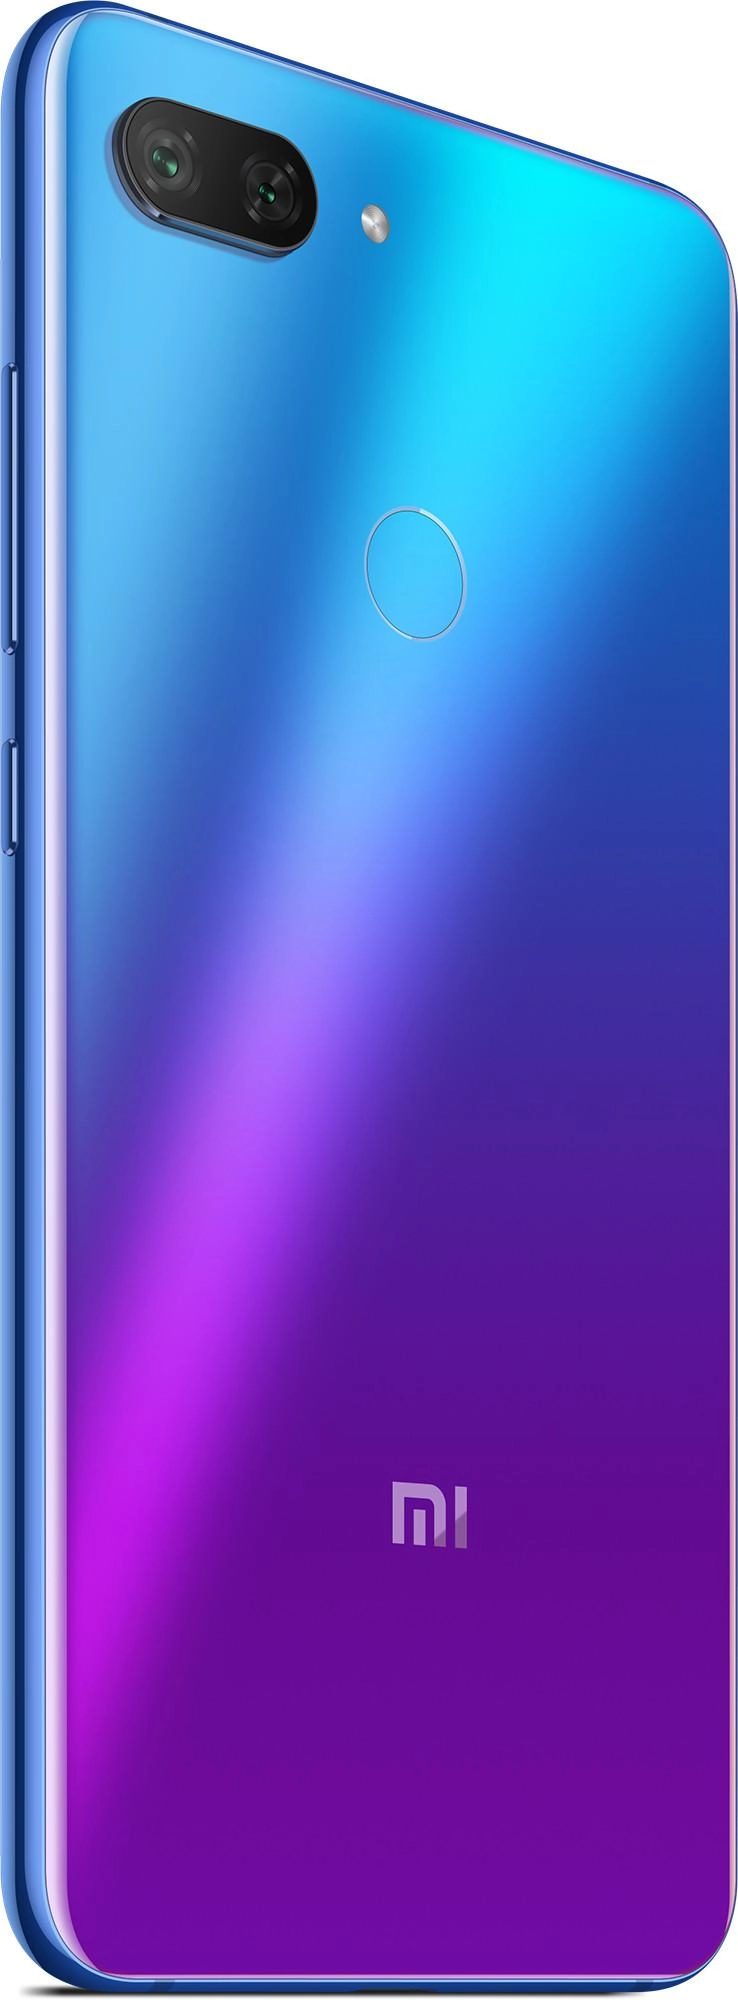 Цена Смартфон Xiaomi Mi 8 Lite 128Gb Aurora Blue